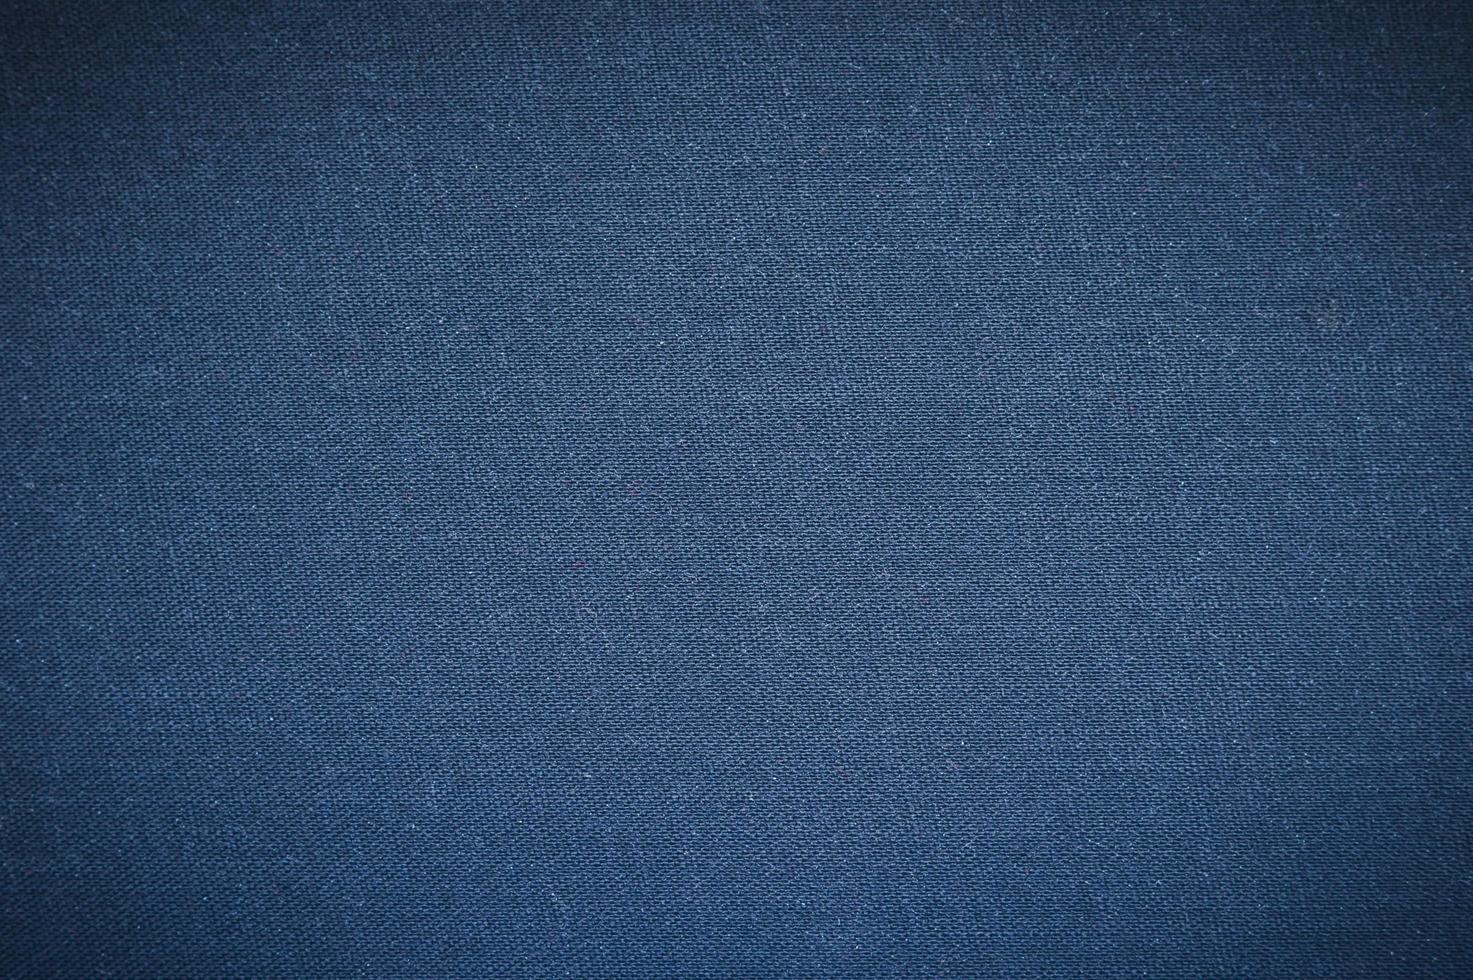 Book cover canvas textured dark blue background photo